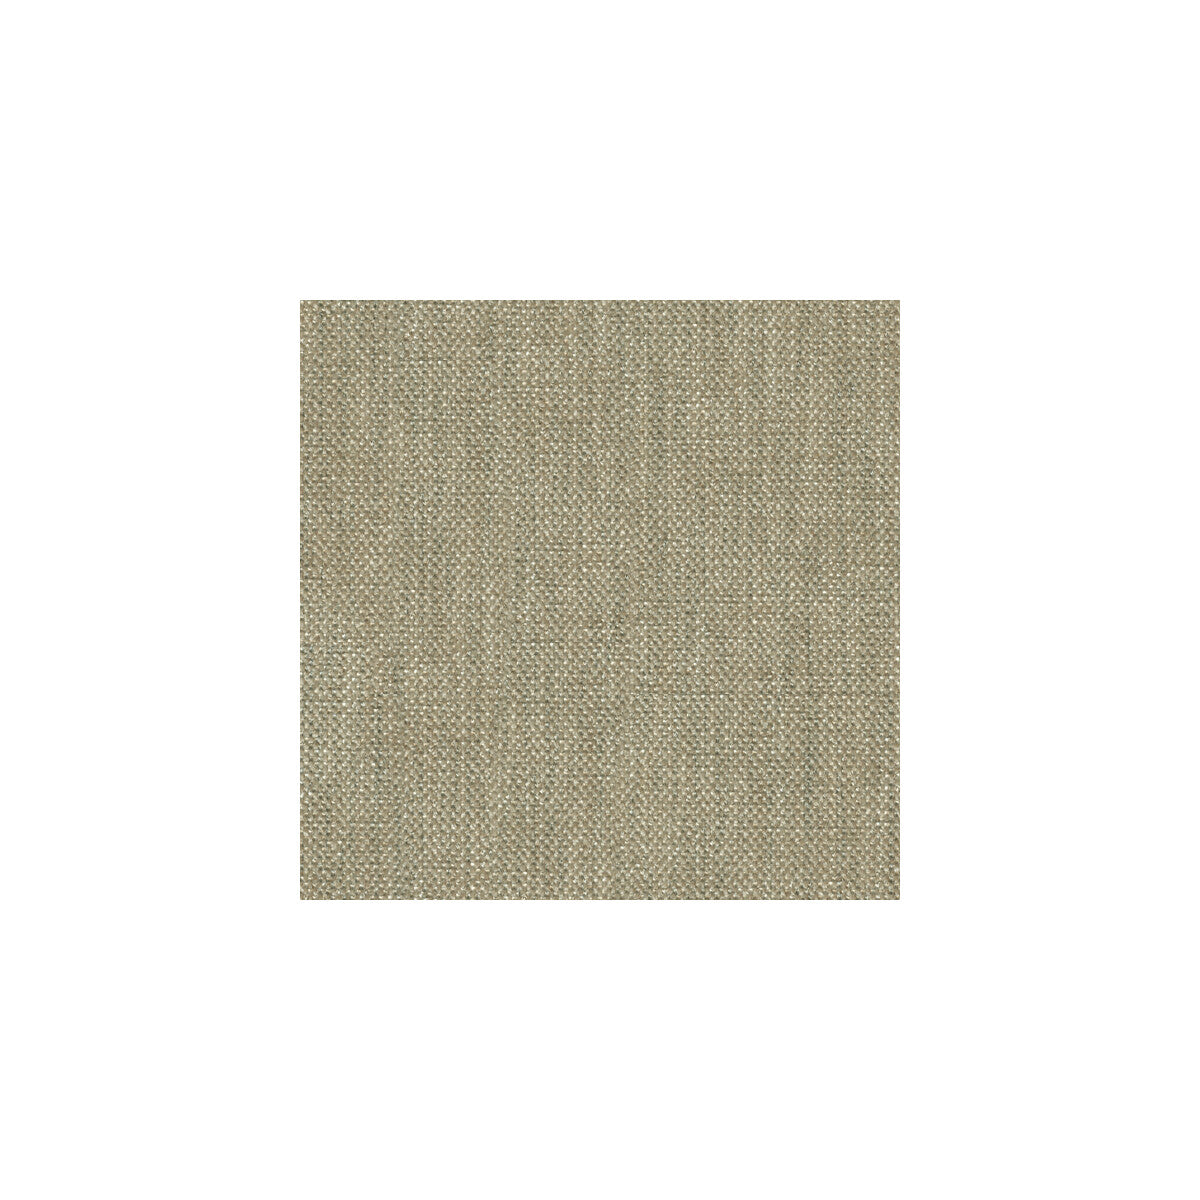 Kravet Smart fabric in 32963-11 color - pattern 32963.11.0 - by Kravet Smart